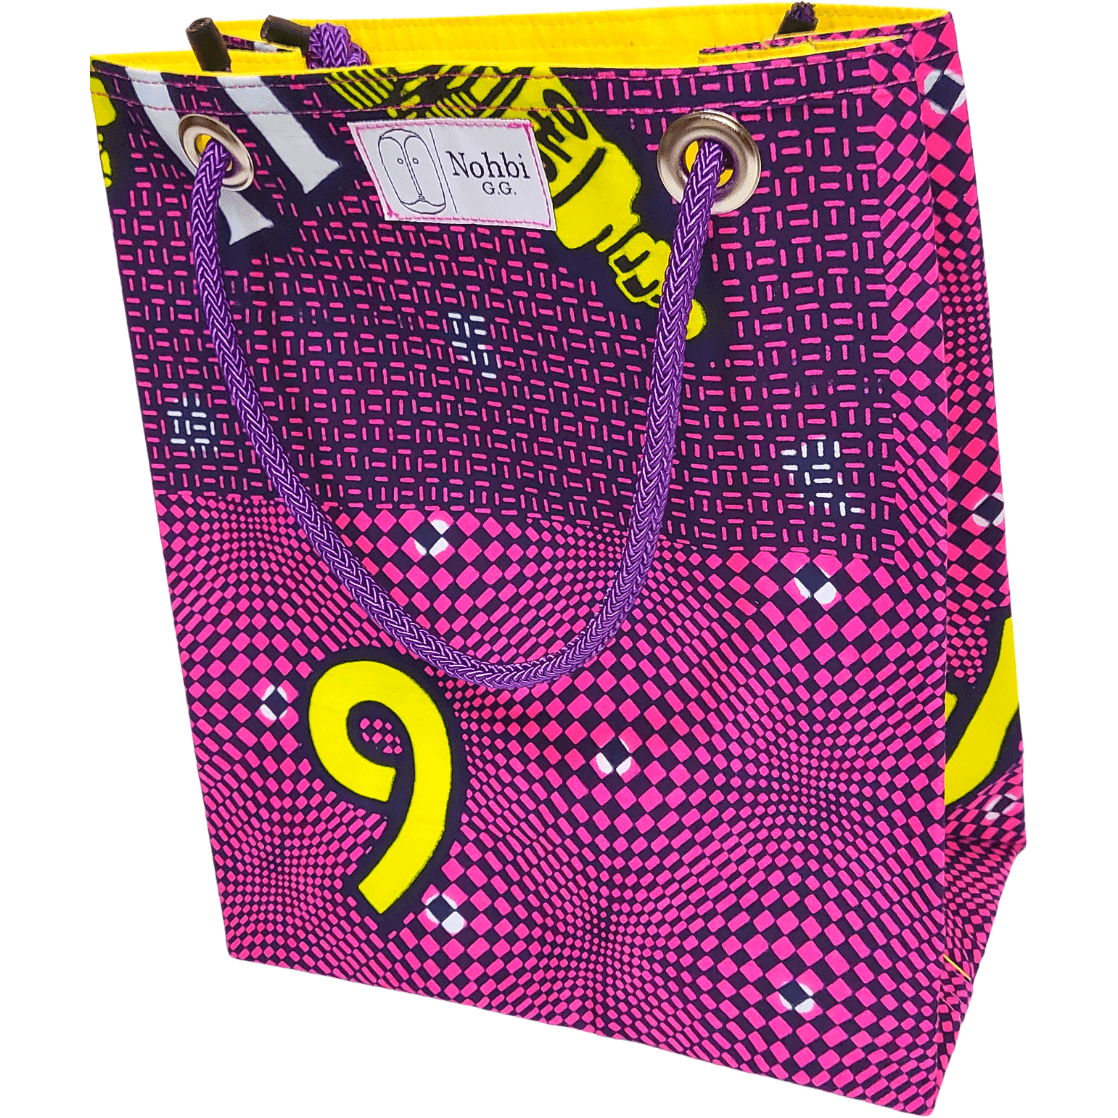 Medium Minimalist Bag Pink & Yellow - NOHBI